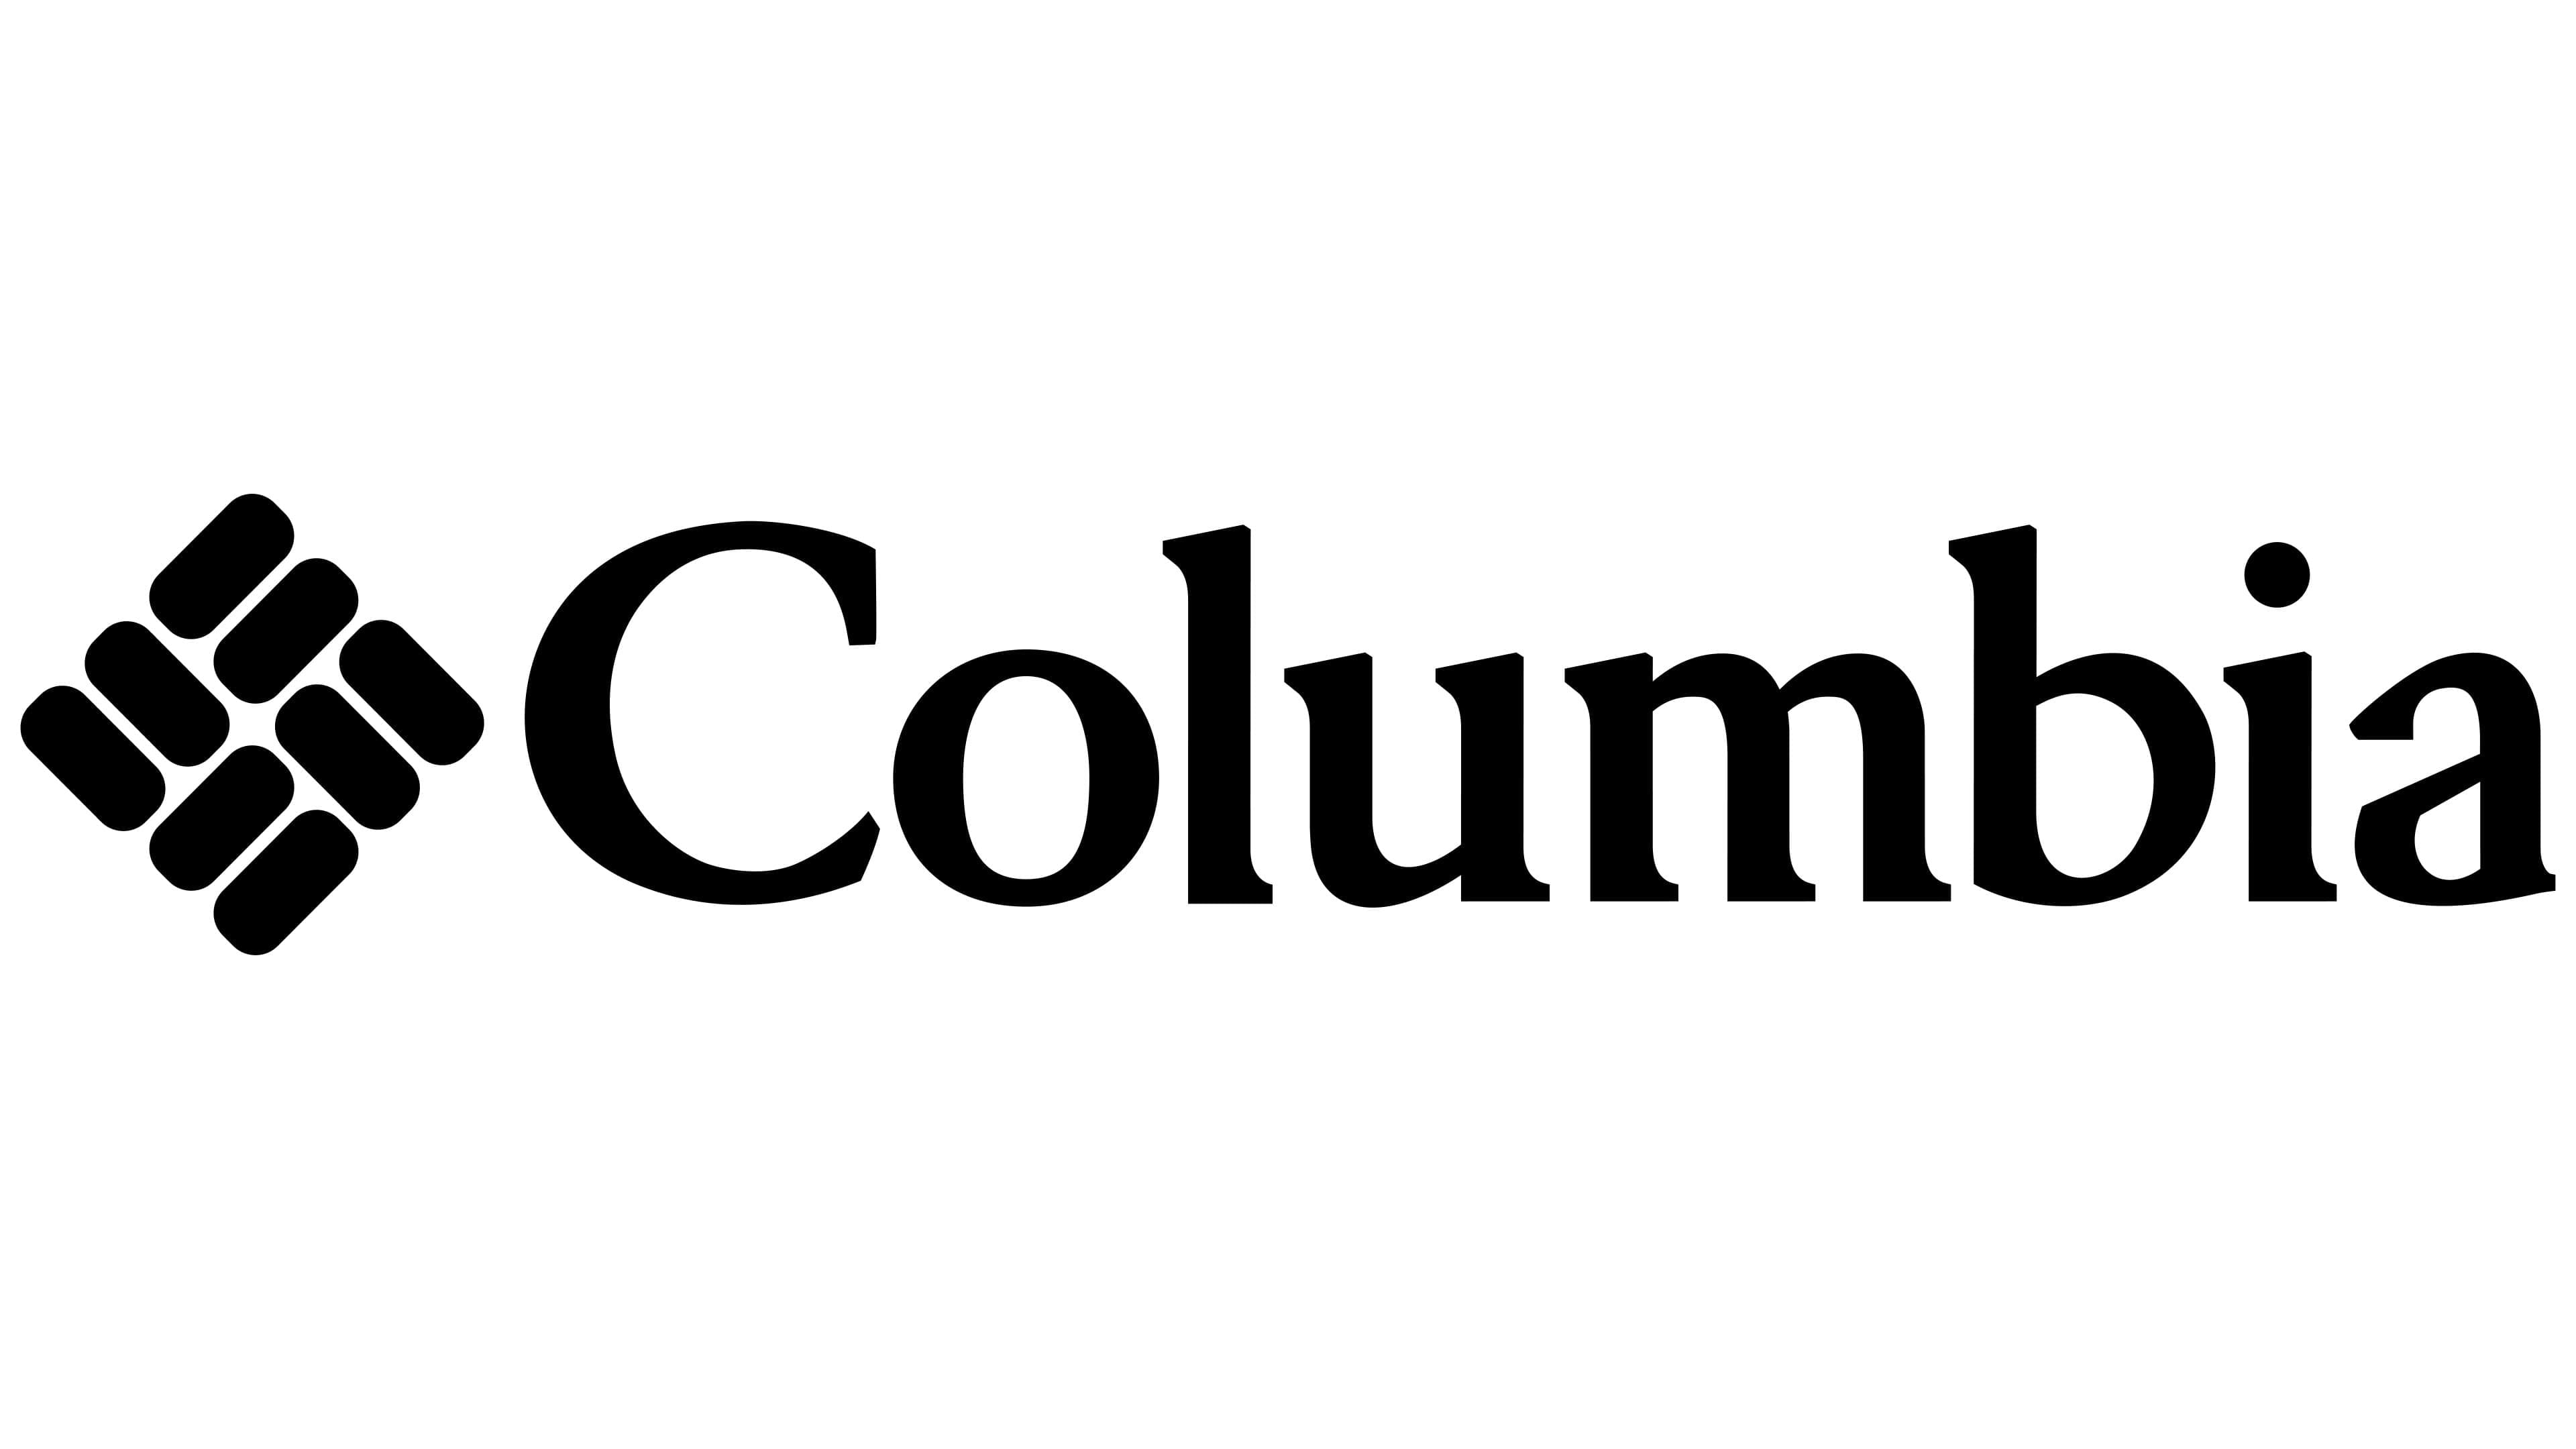 Columbia Sportswear Logo Swastika